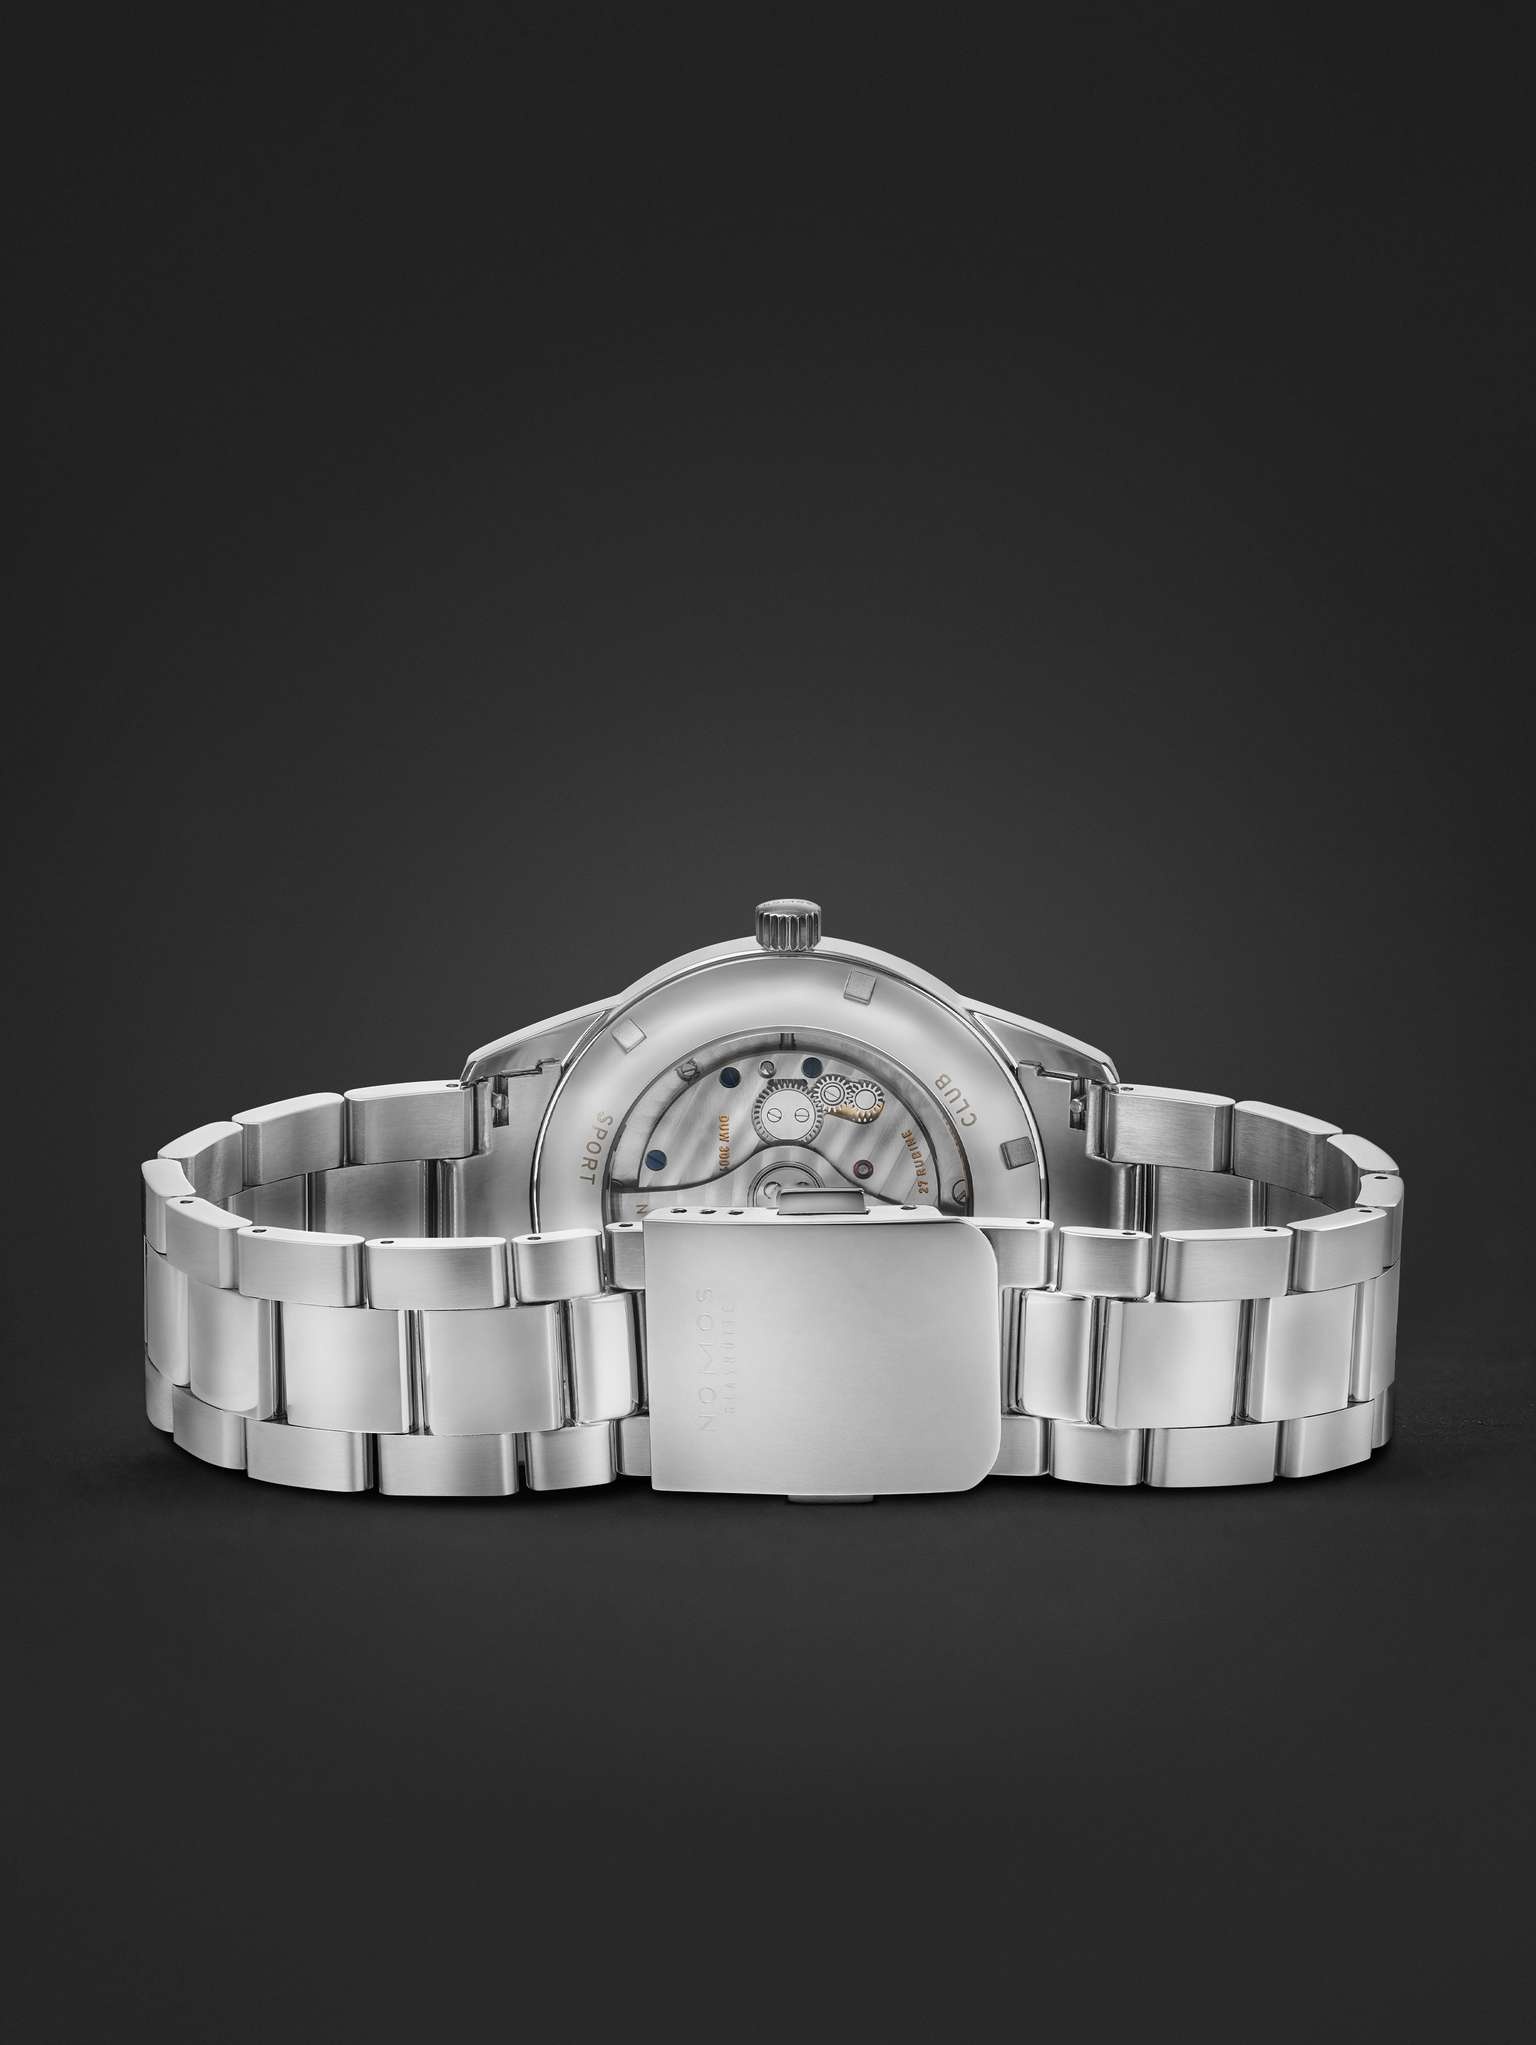 Club Sport Neomatik Automatic 39.5mm Stainless Steel Watch, Ref. No. 760 - 4